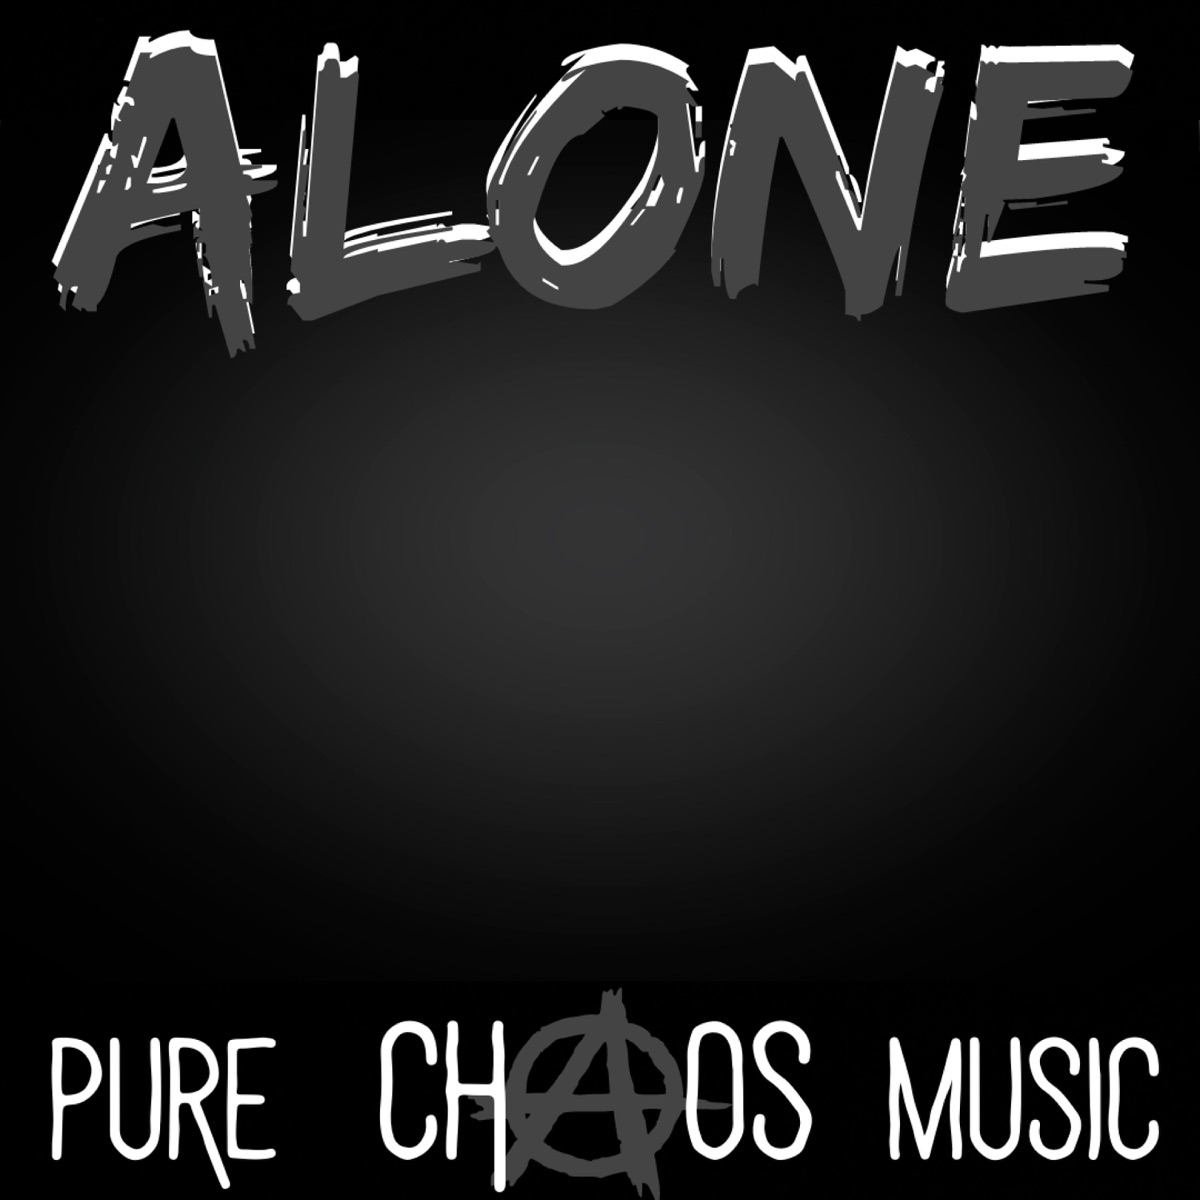 Pure chAos Music - DRAGONS OF ANIME CYPHER ft. Reckless mind, Eternal king,  D-gold rapper, Kidd JayZA & Talon music MP3 Download & Lyrics